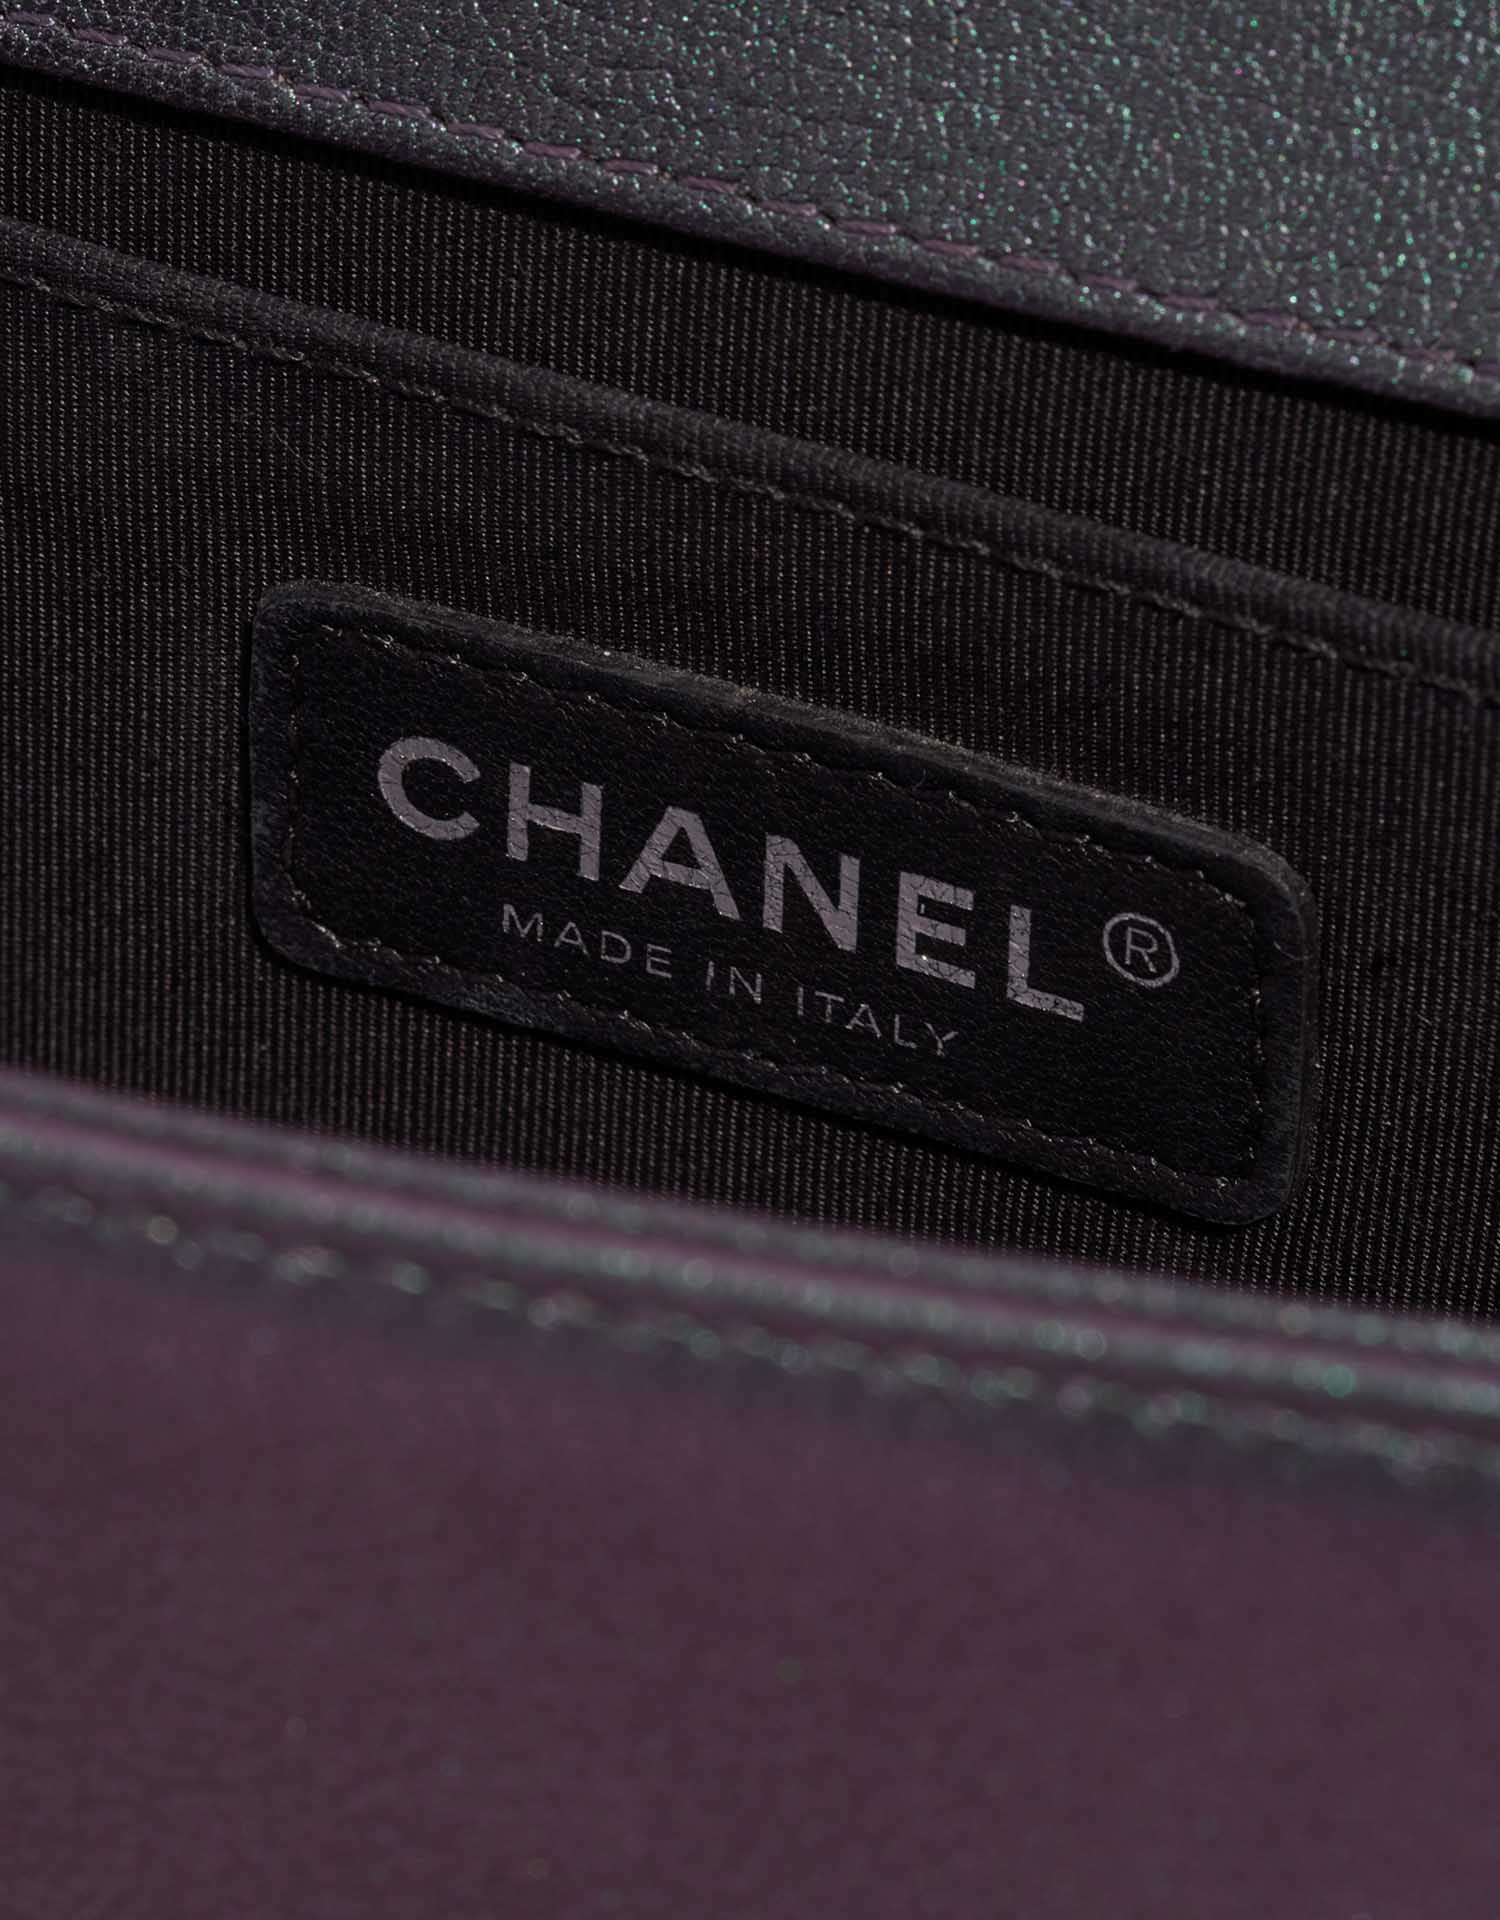 Chanel Boy OldMedium Purple-Greyish Logo  | Sell your designer bag on Saclab.com